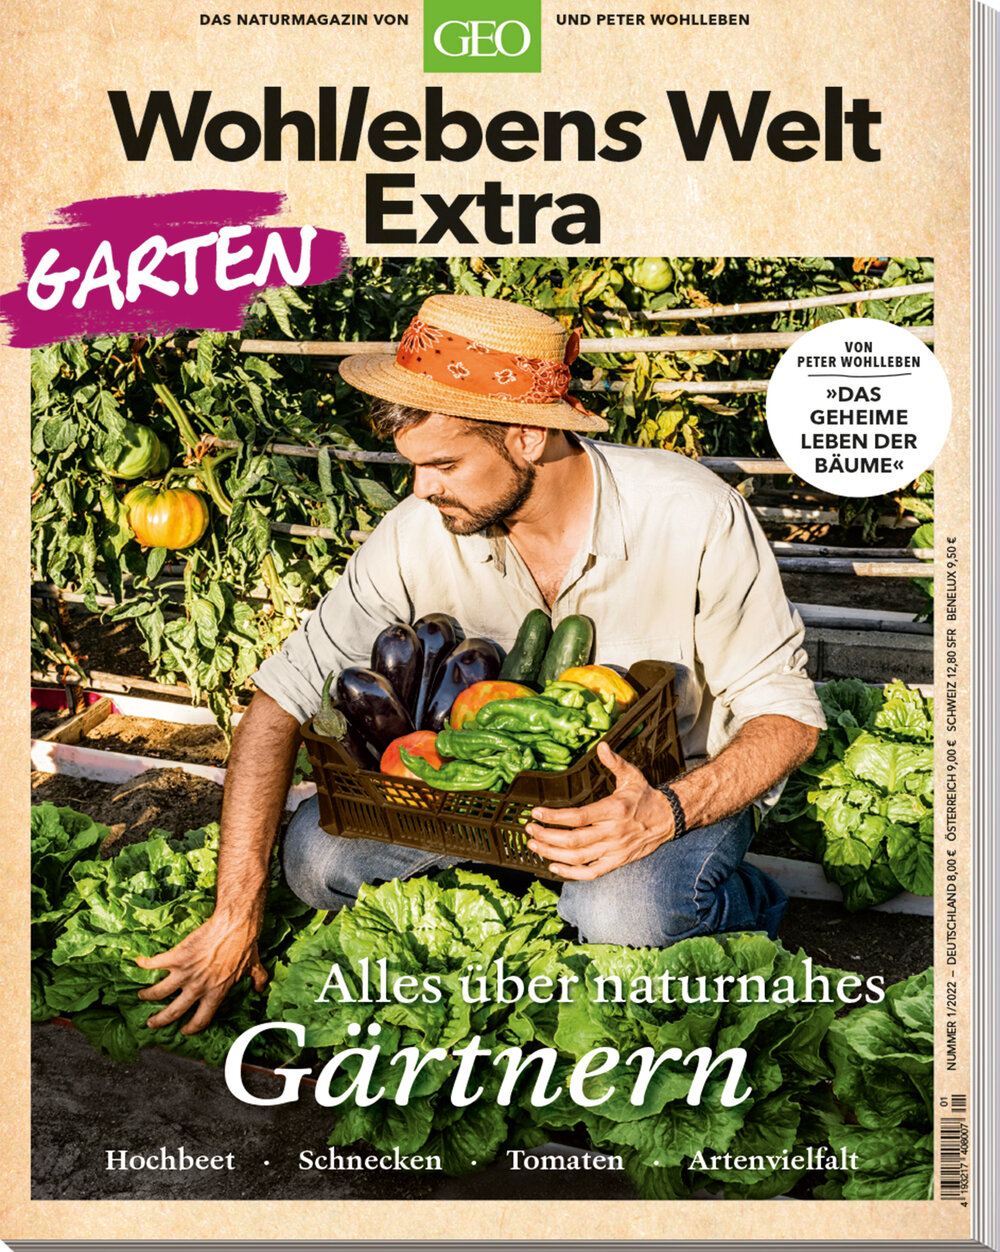 WOHLLEBENS WELT Extra „Gärtnern"